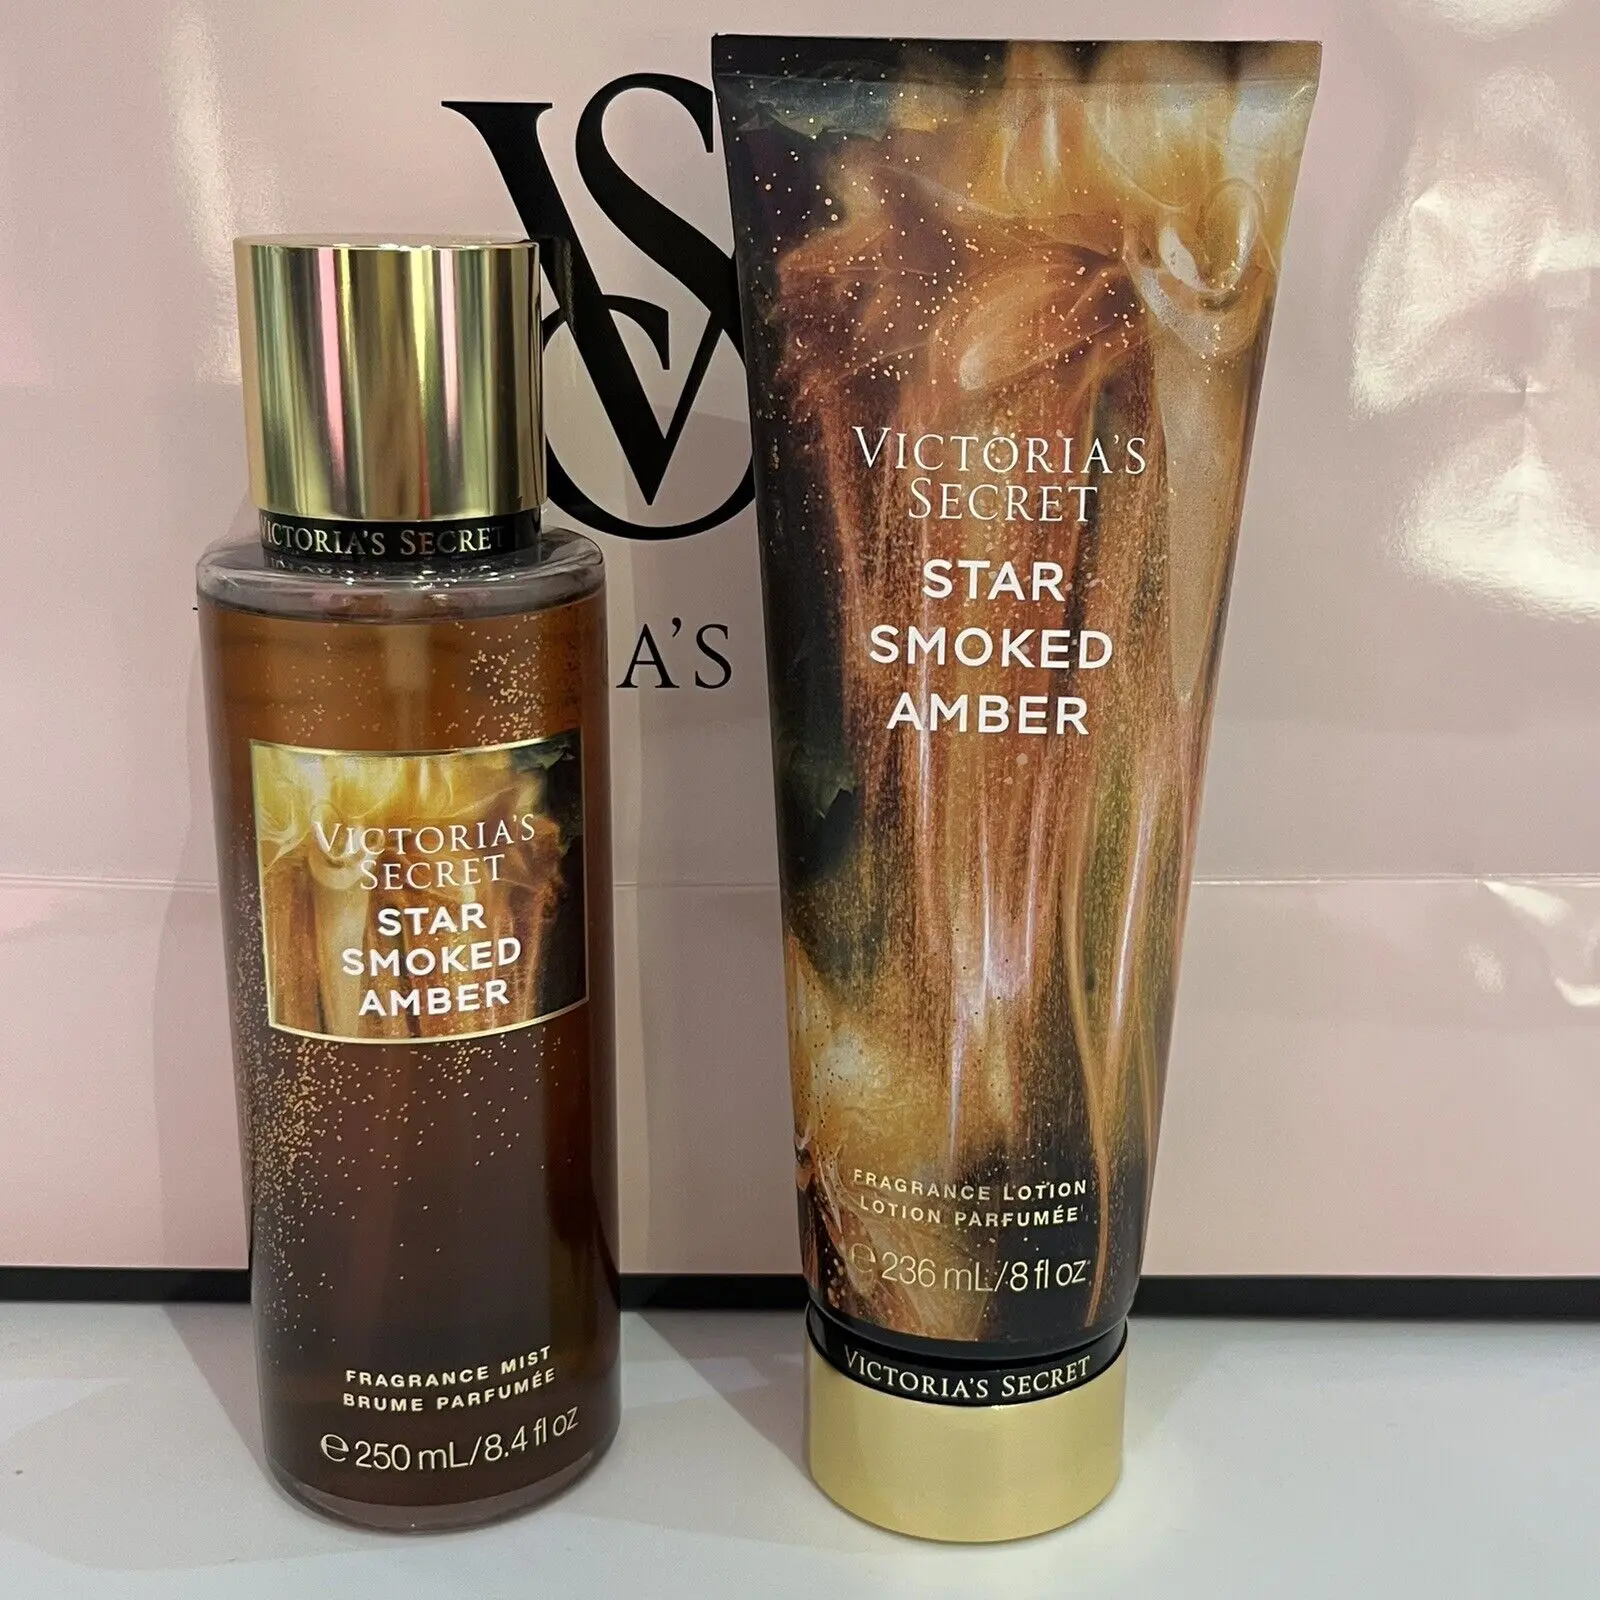 star smoked amber victoria's secret - What's the best Victoria Secret spray